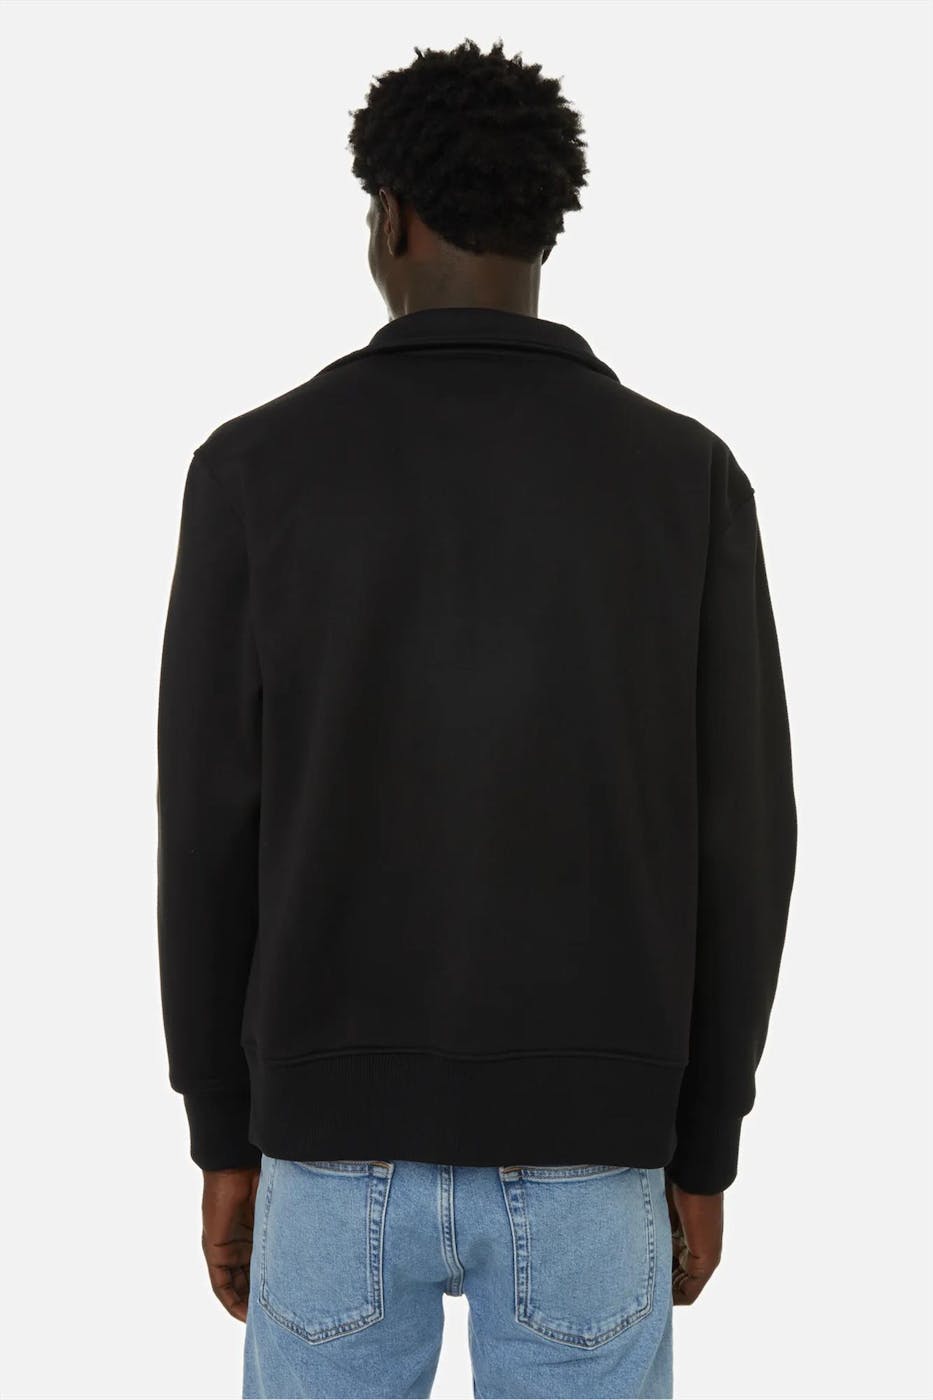 Calvin Klein Jeans - Zwarte Tape Cardigan sweater